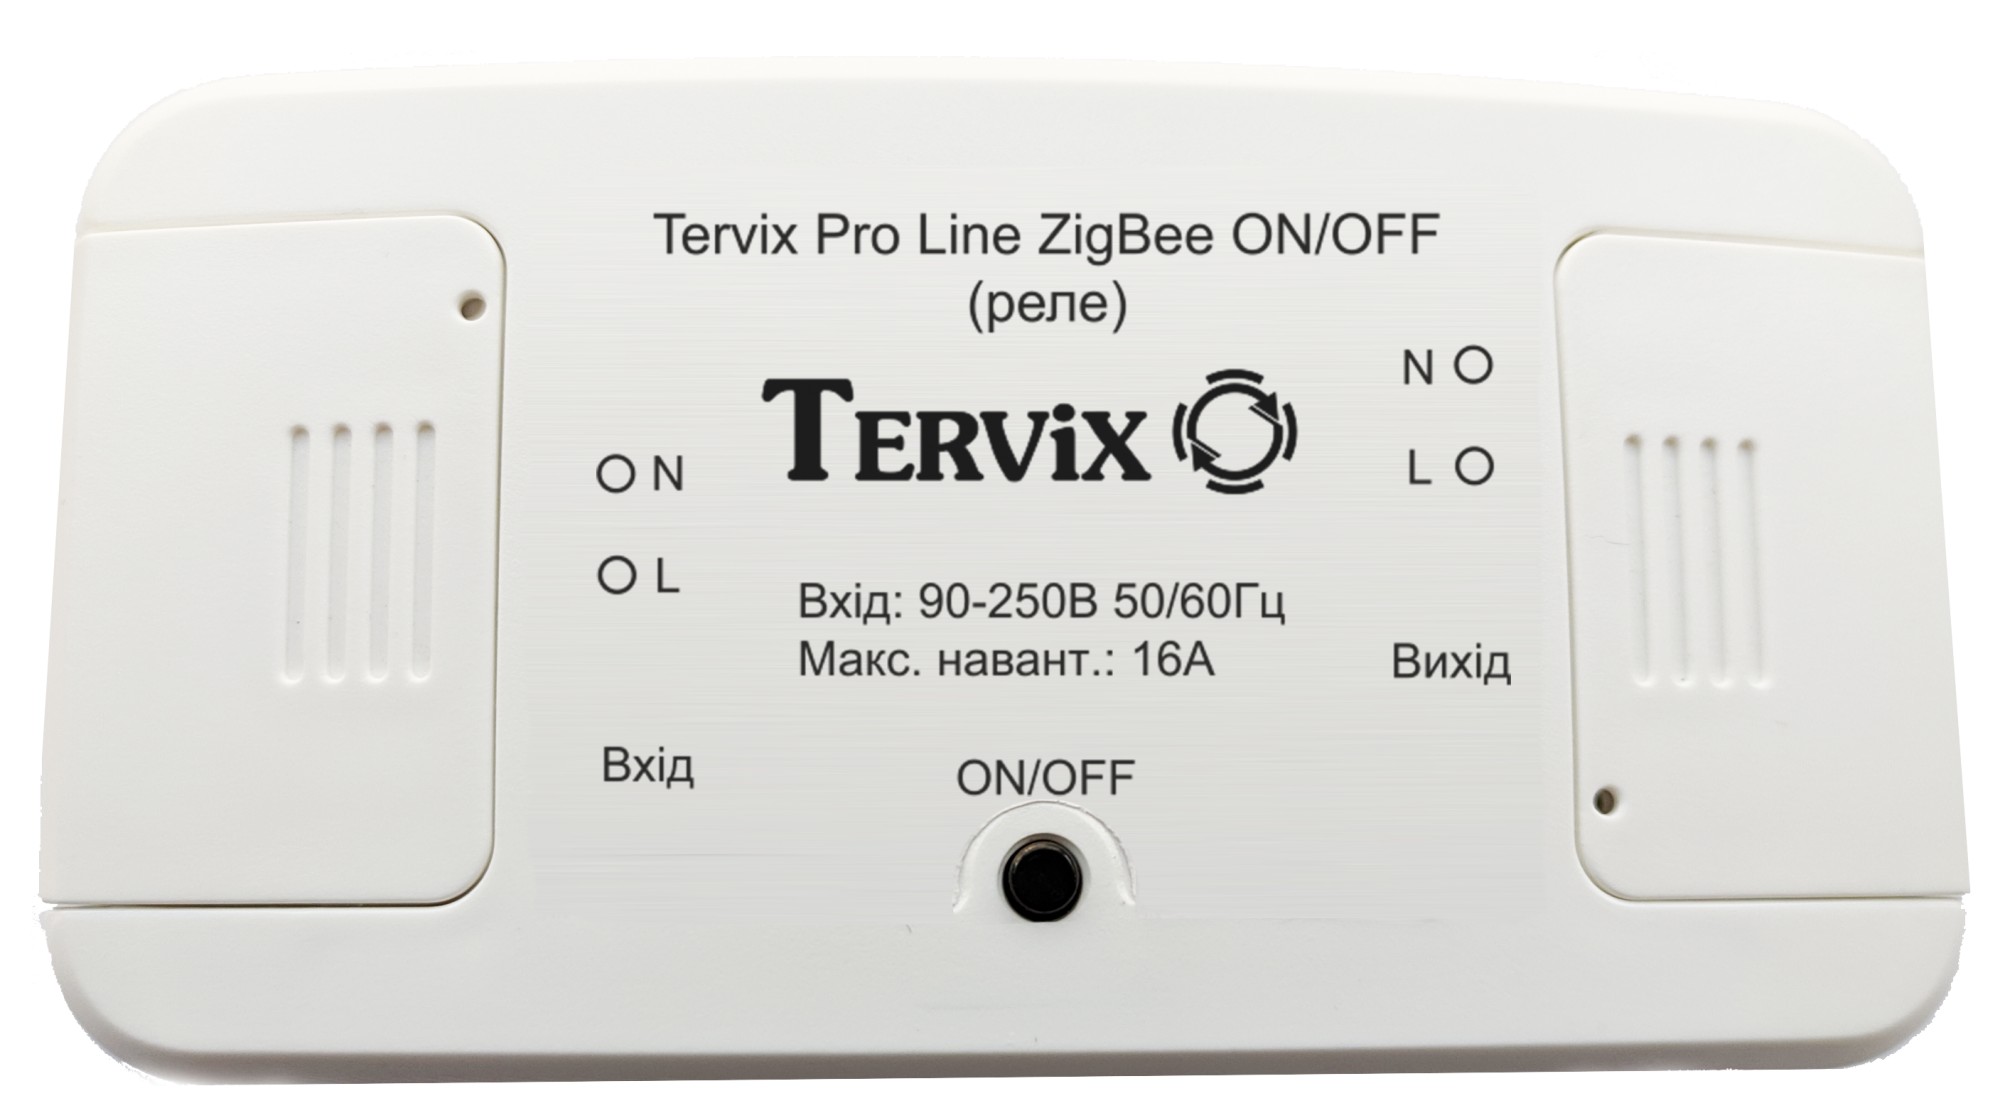 Цена реле Tervix Pro Line ZigBee On/Off (431121) в Киеве